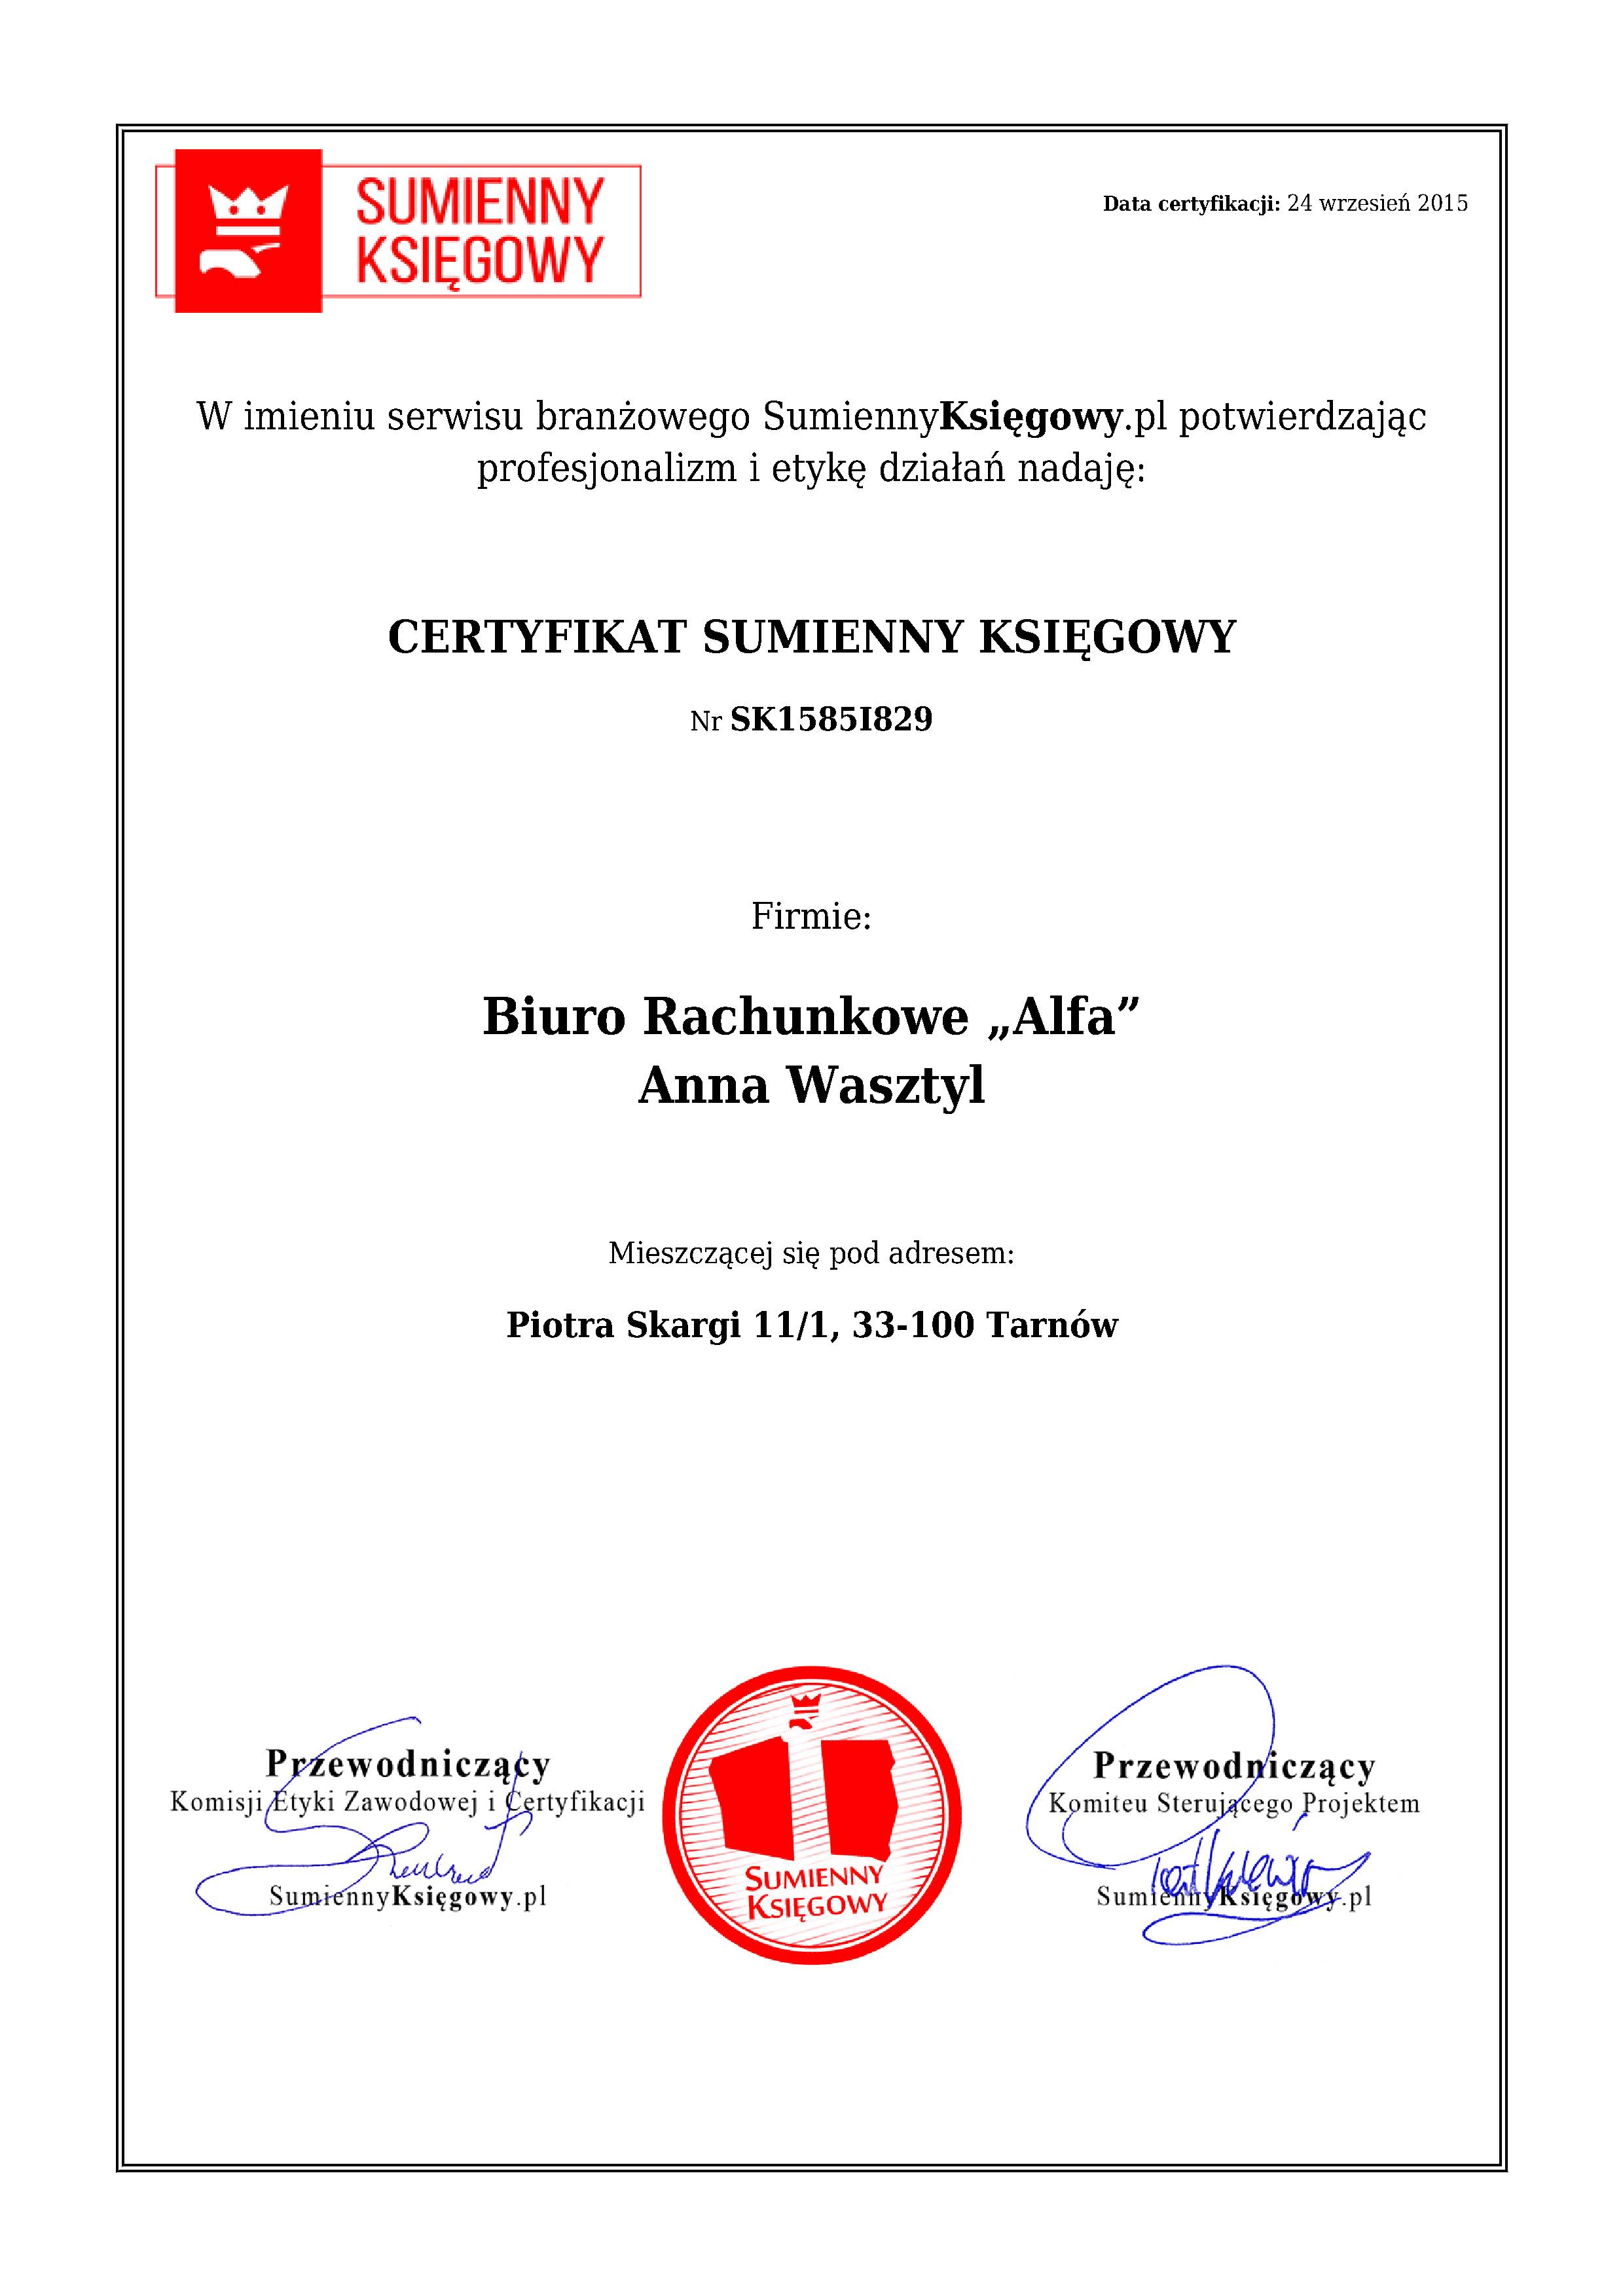 Biuro Rachunkowe „Alfa” Anna Wasztyl certyfikat 1